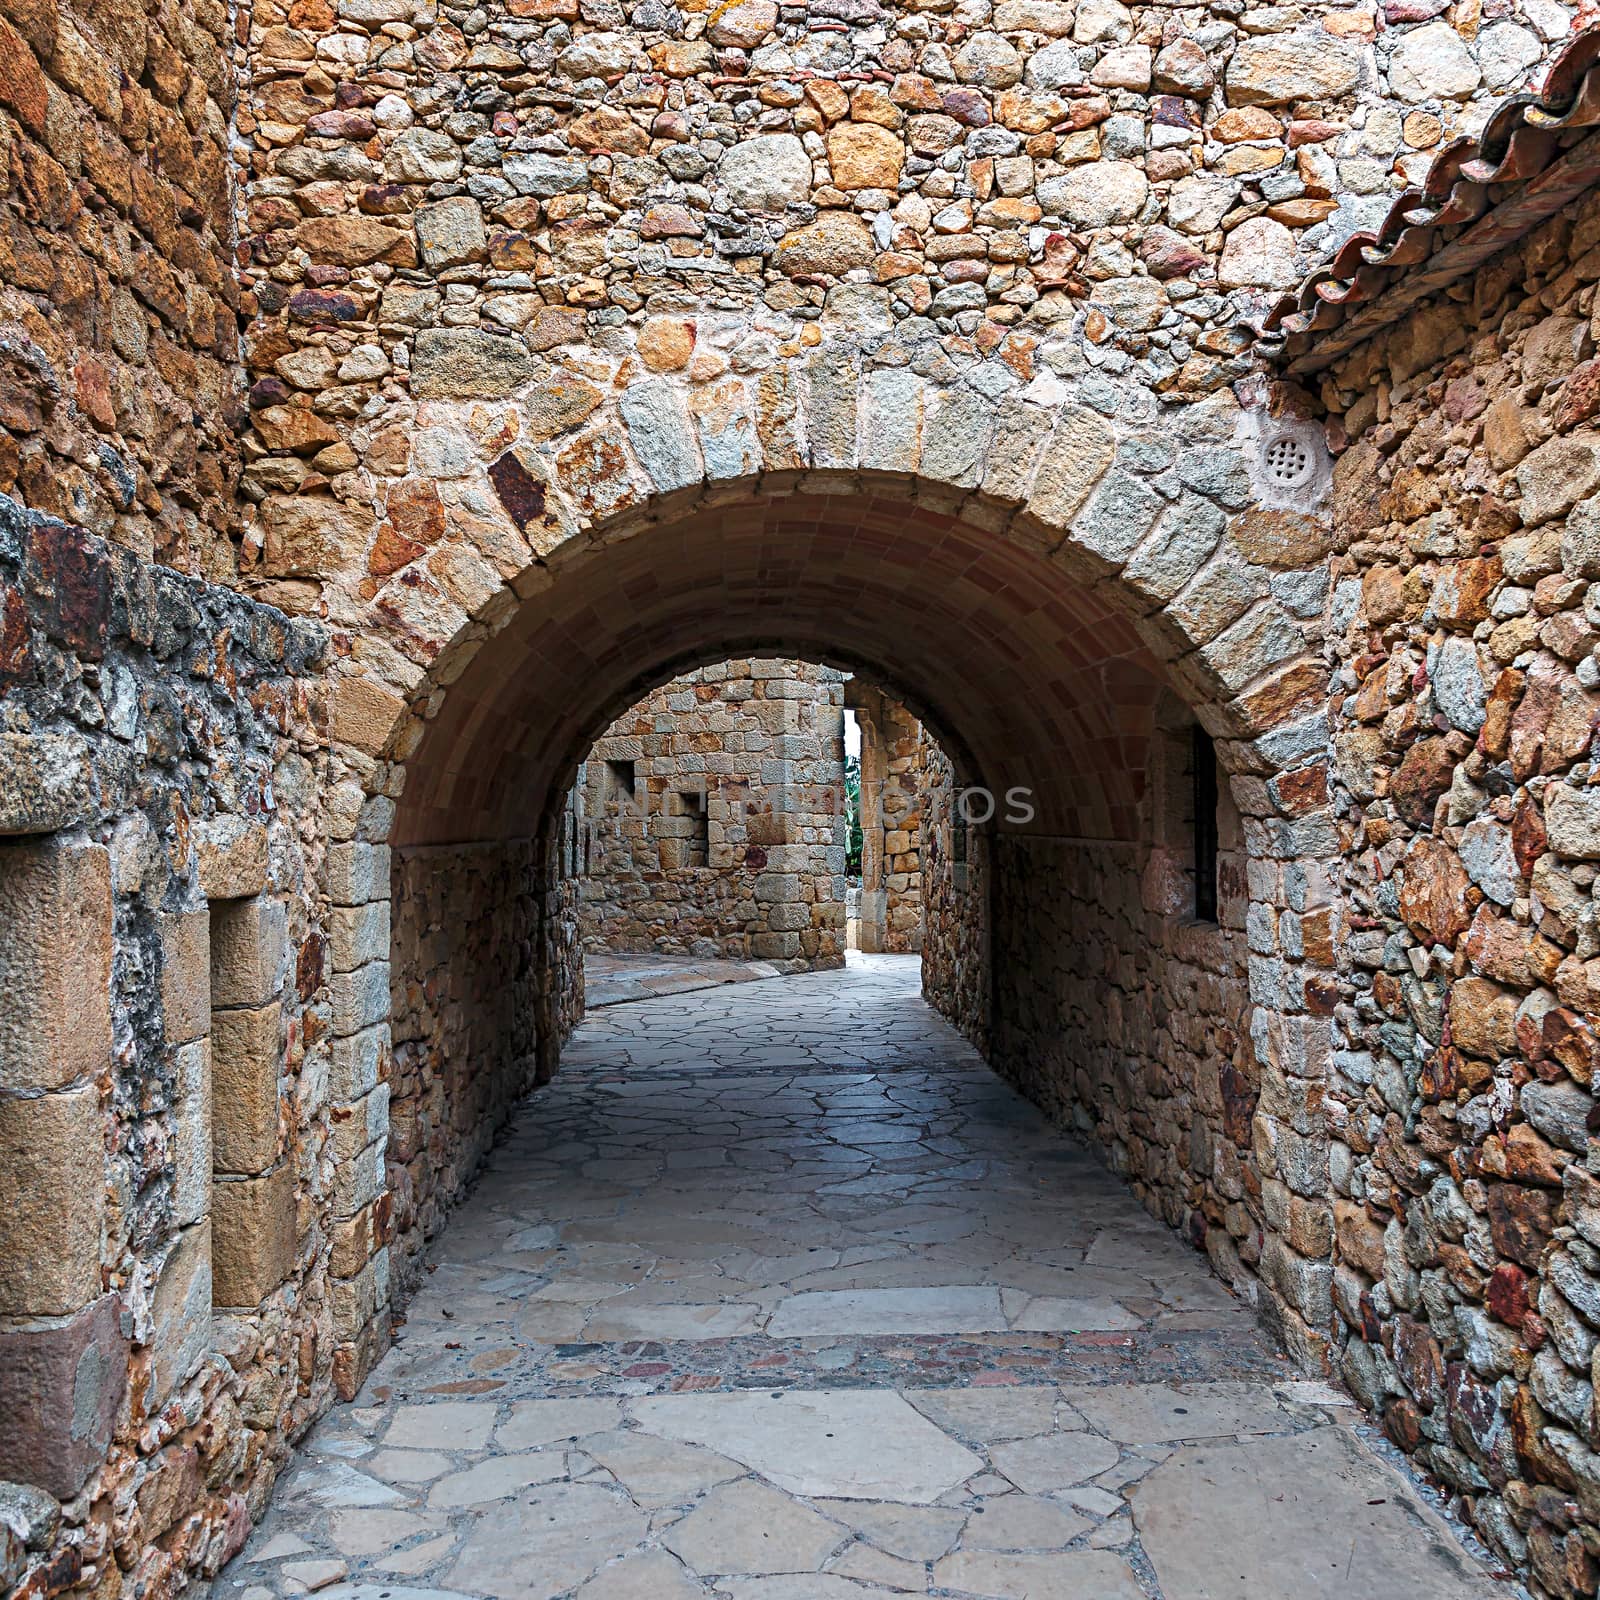 Castle de Pals, historic stone walls and arches, Pals, Spain by seka33